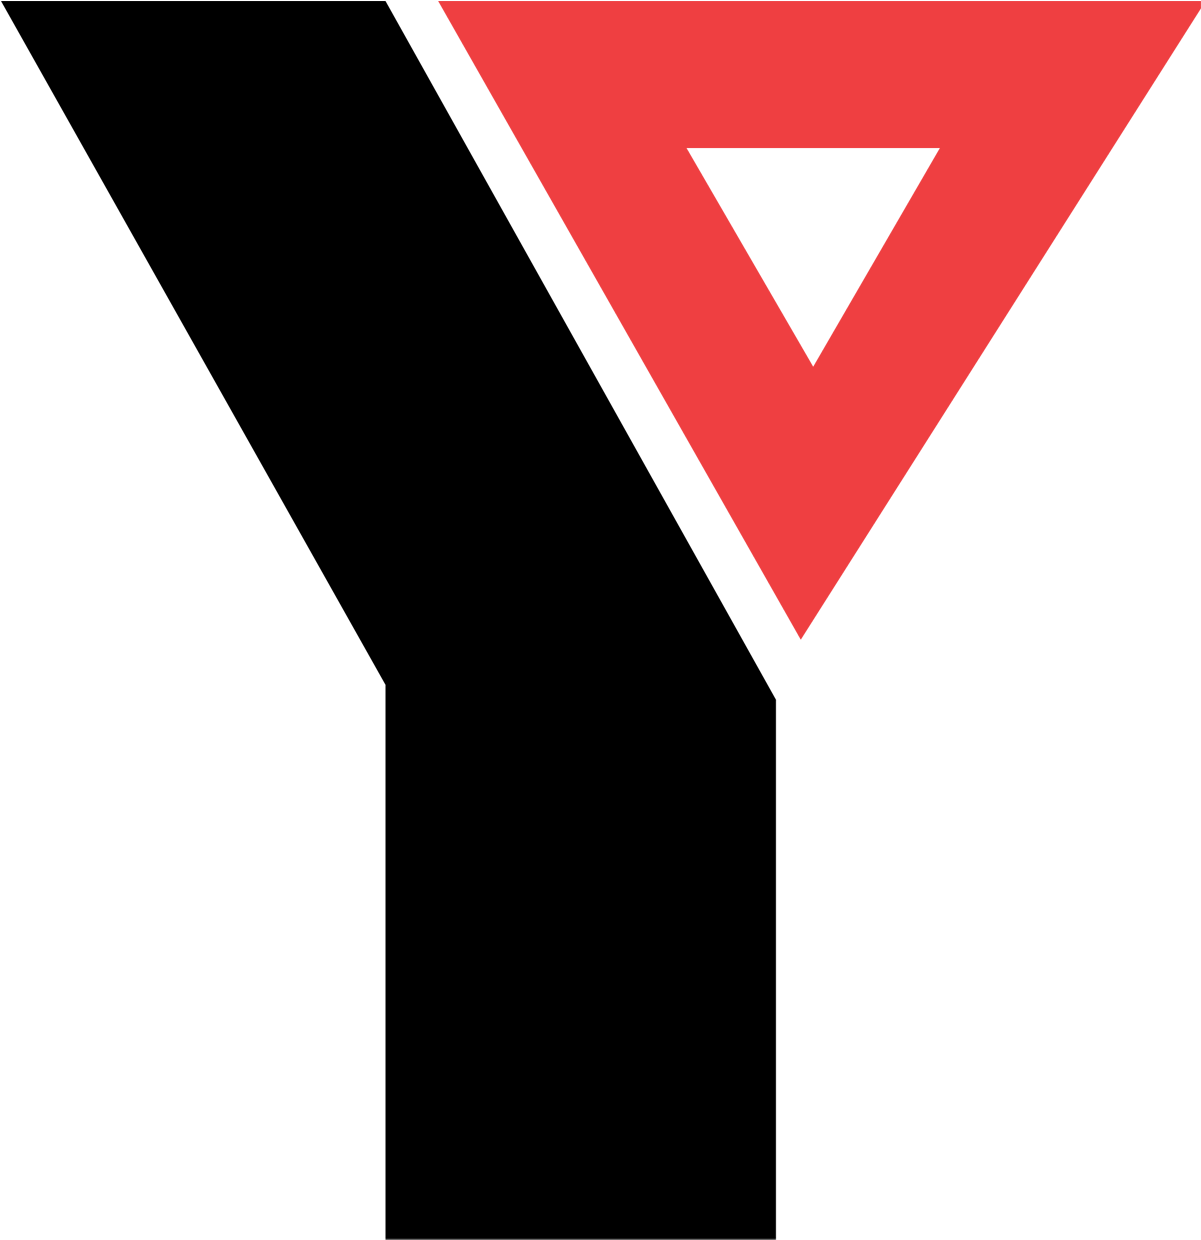 Ymca International Logo - Ymca Hamilton Recreation Centre (2272x1704)